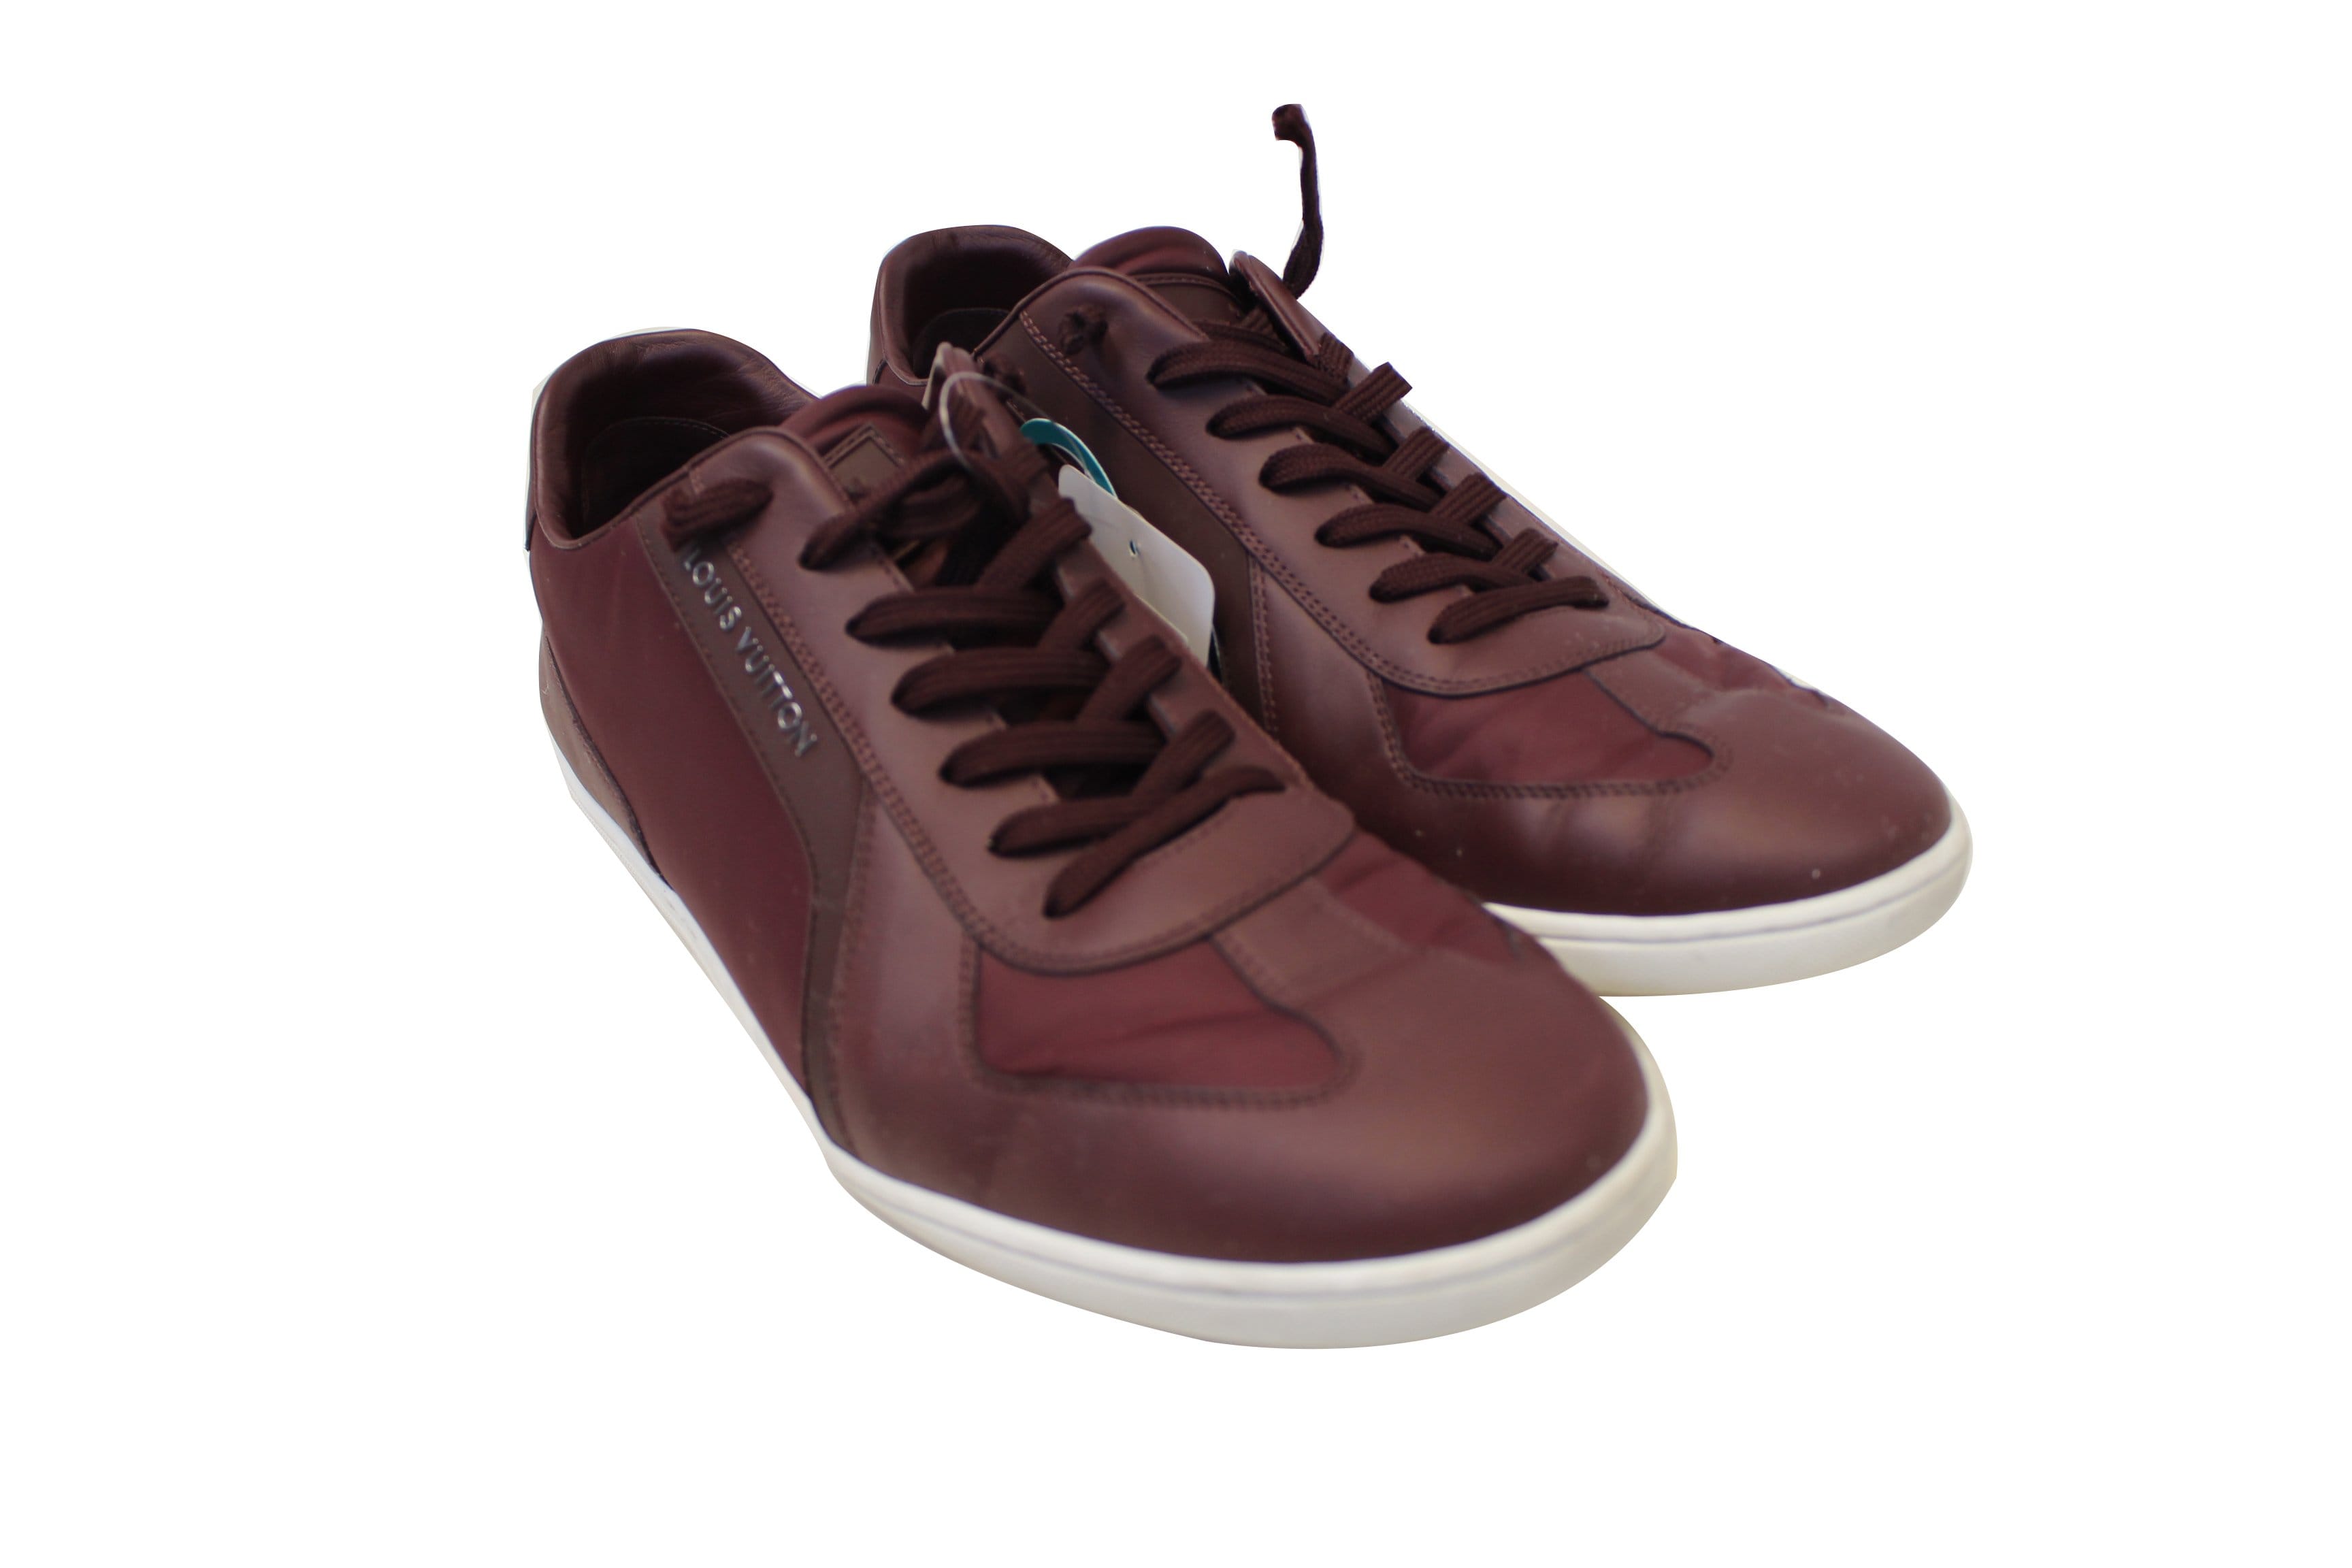 Louis Vuitton, Shoes, Mens Brown Louis Vuitton Leather Sneakers Size 8